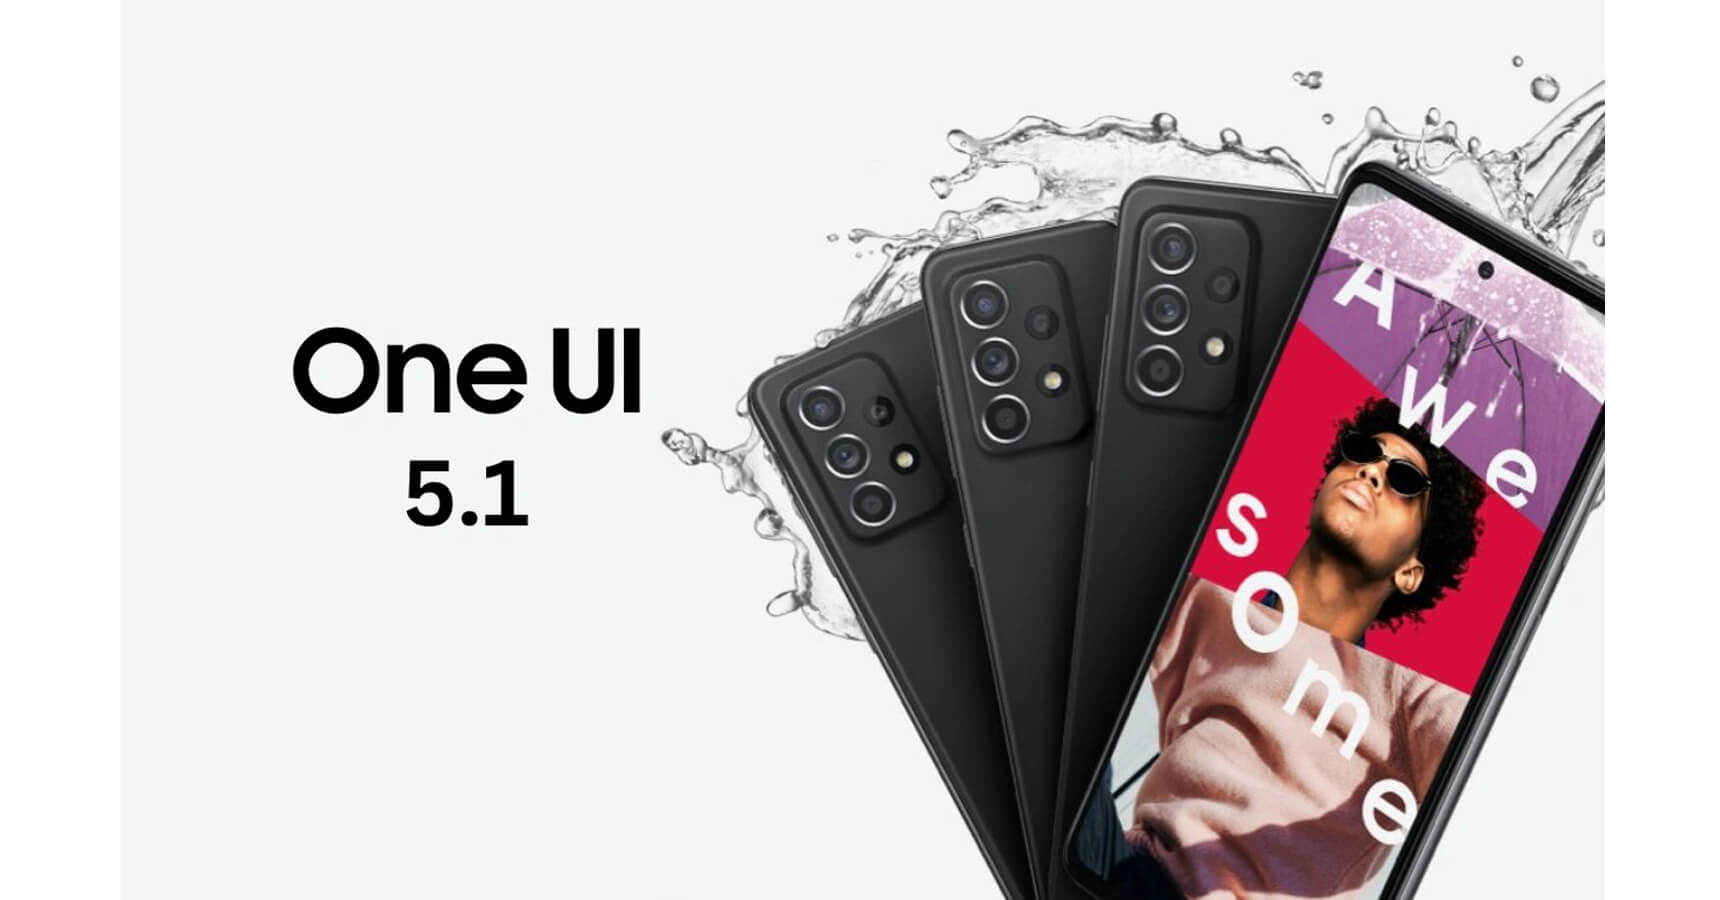 Samsung Galaxy A52 5G Tab S7 Receives One UI 5.1 Update